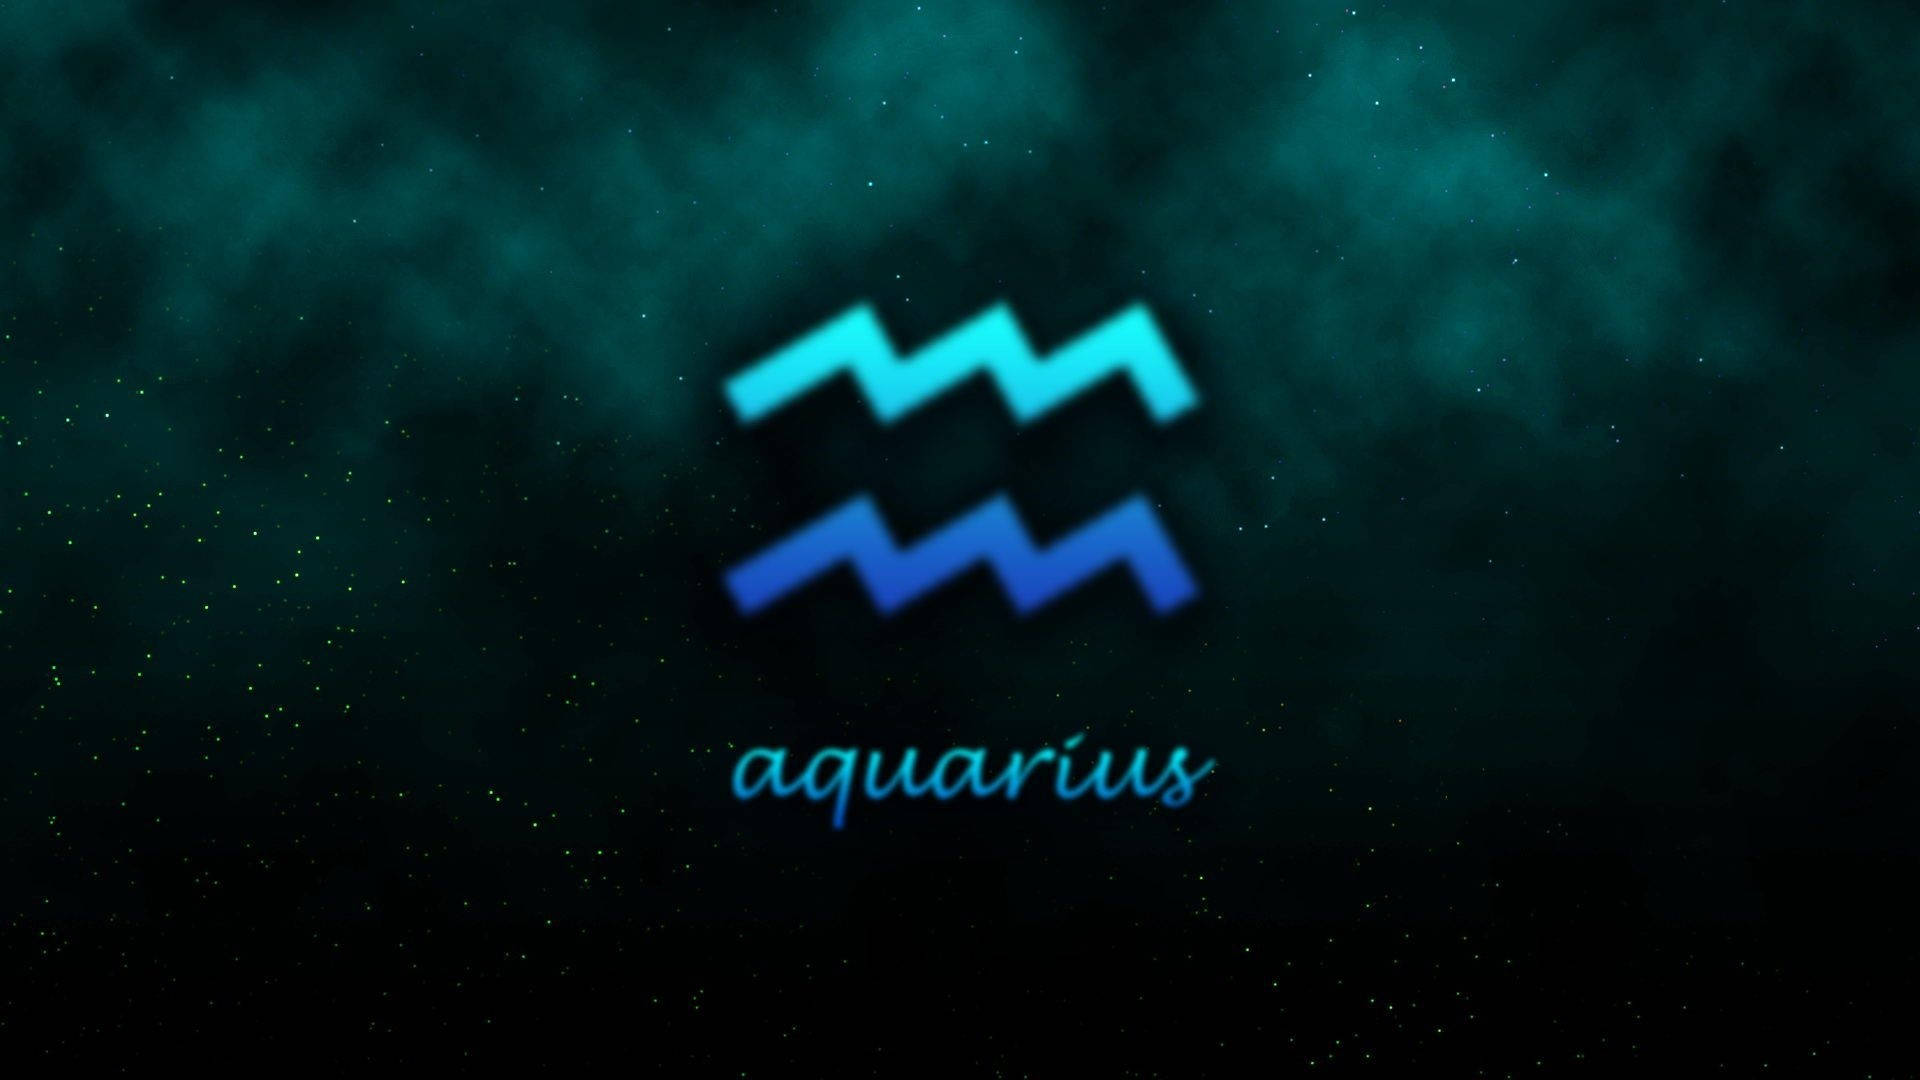 Cute Aquarius Wallpaper